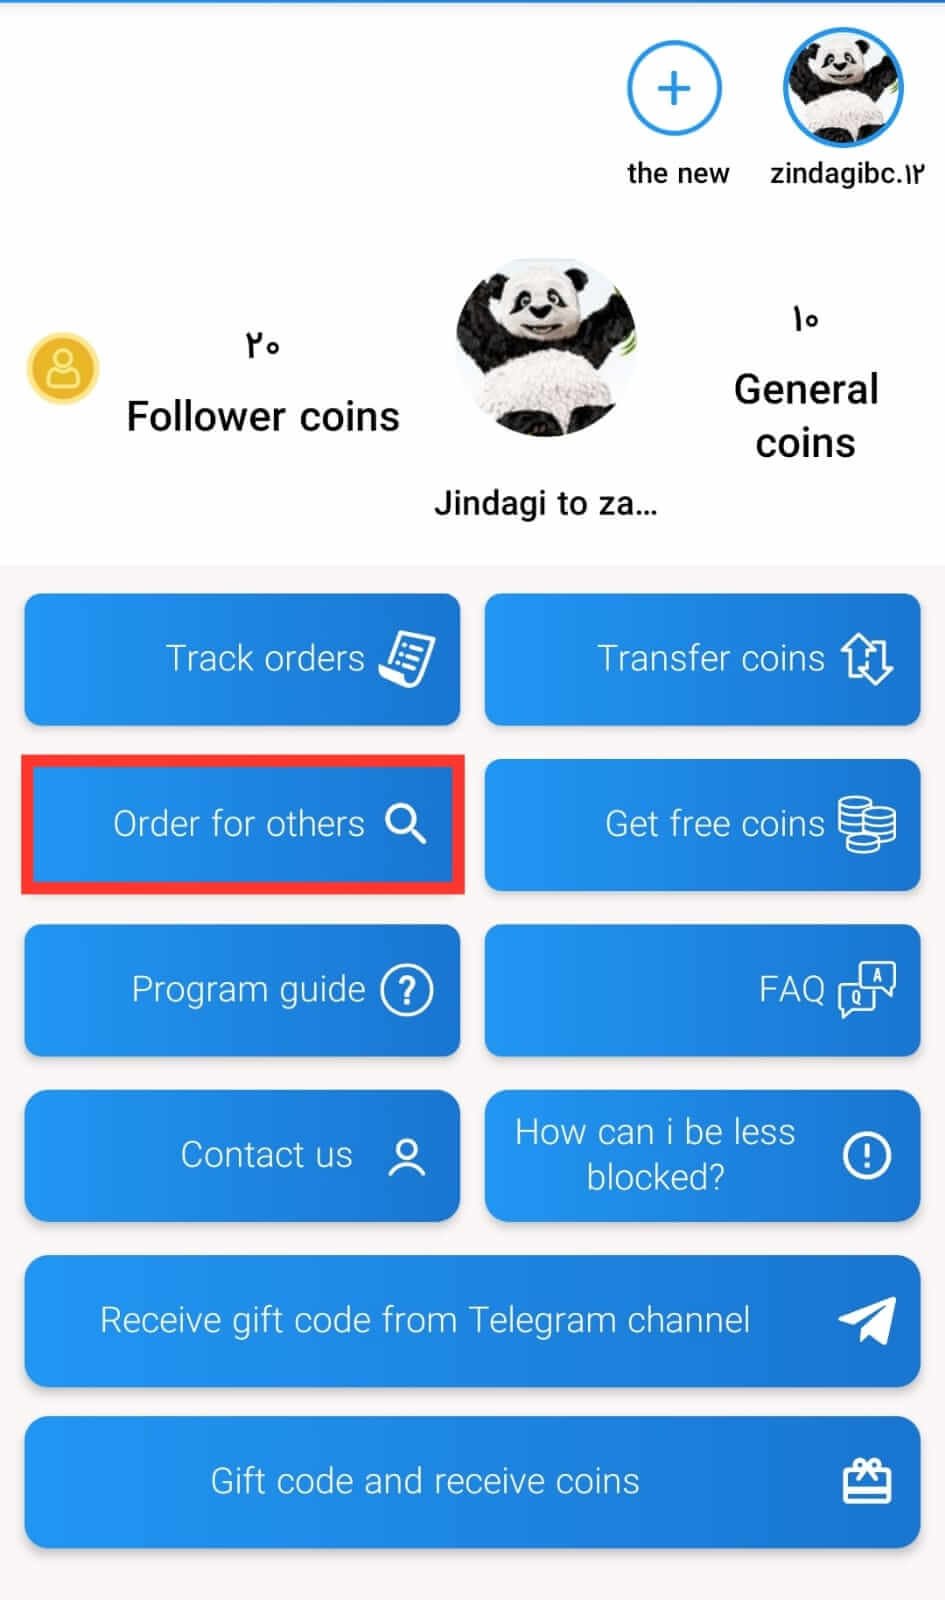 order for oyhers in FollowBaaz App